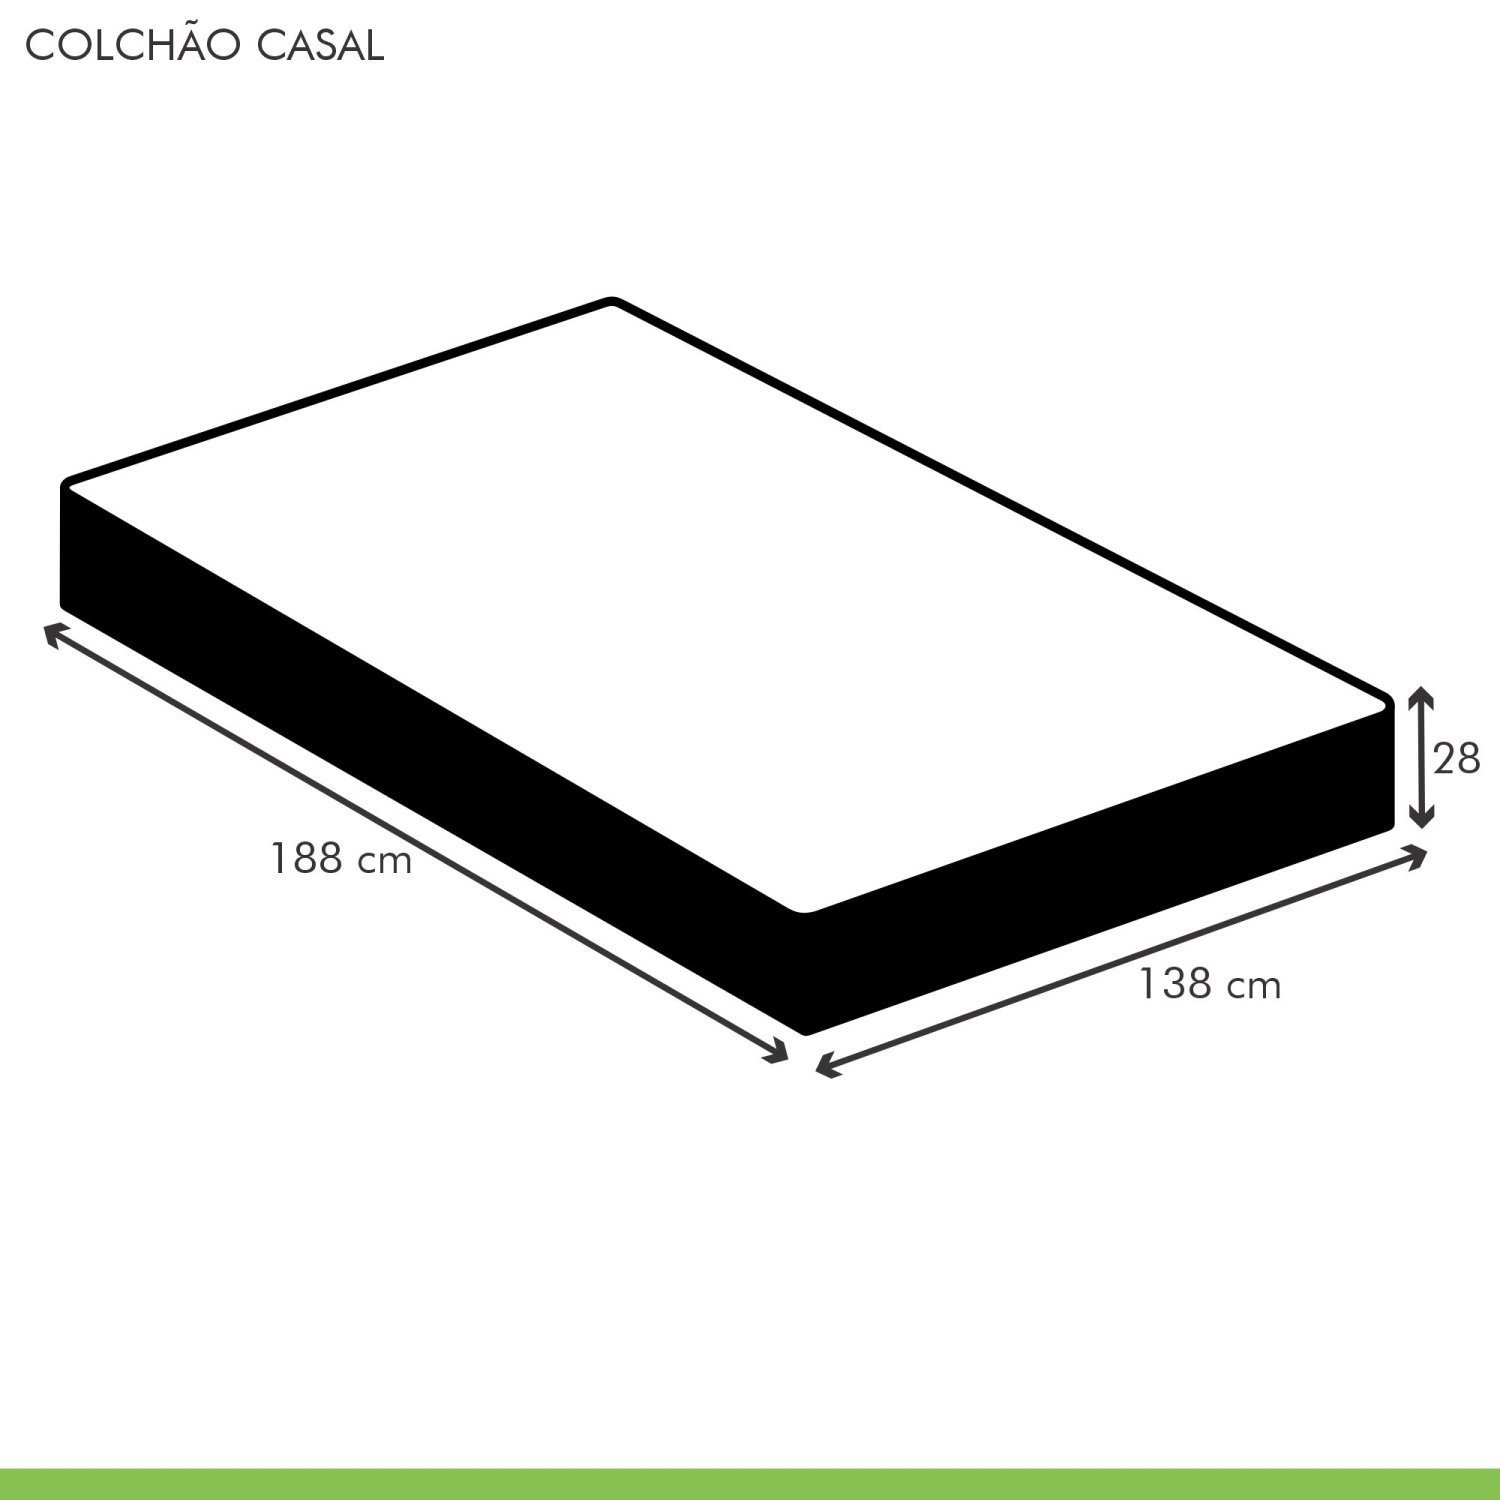 Colchão Casal Molas Extrapedic Íris 28x138x188cm  - 5